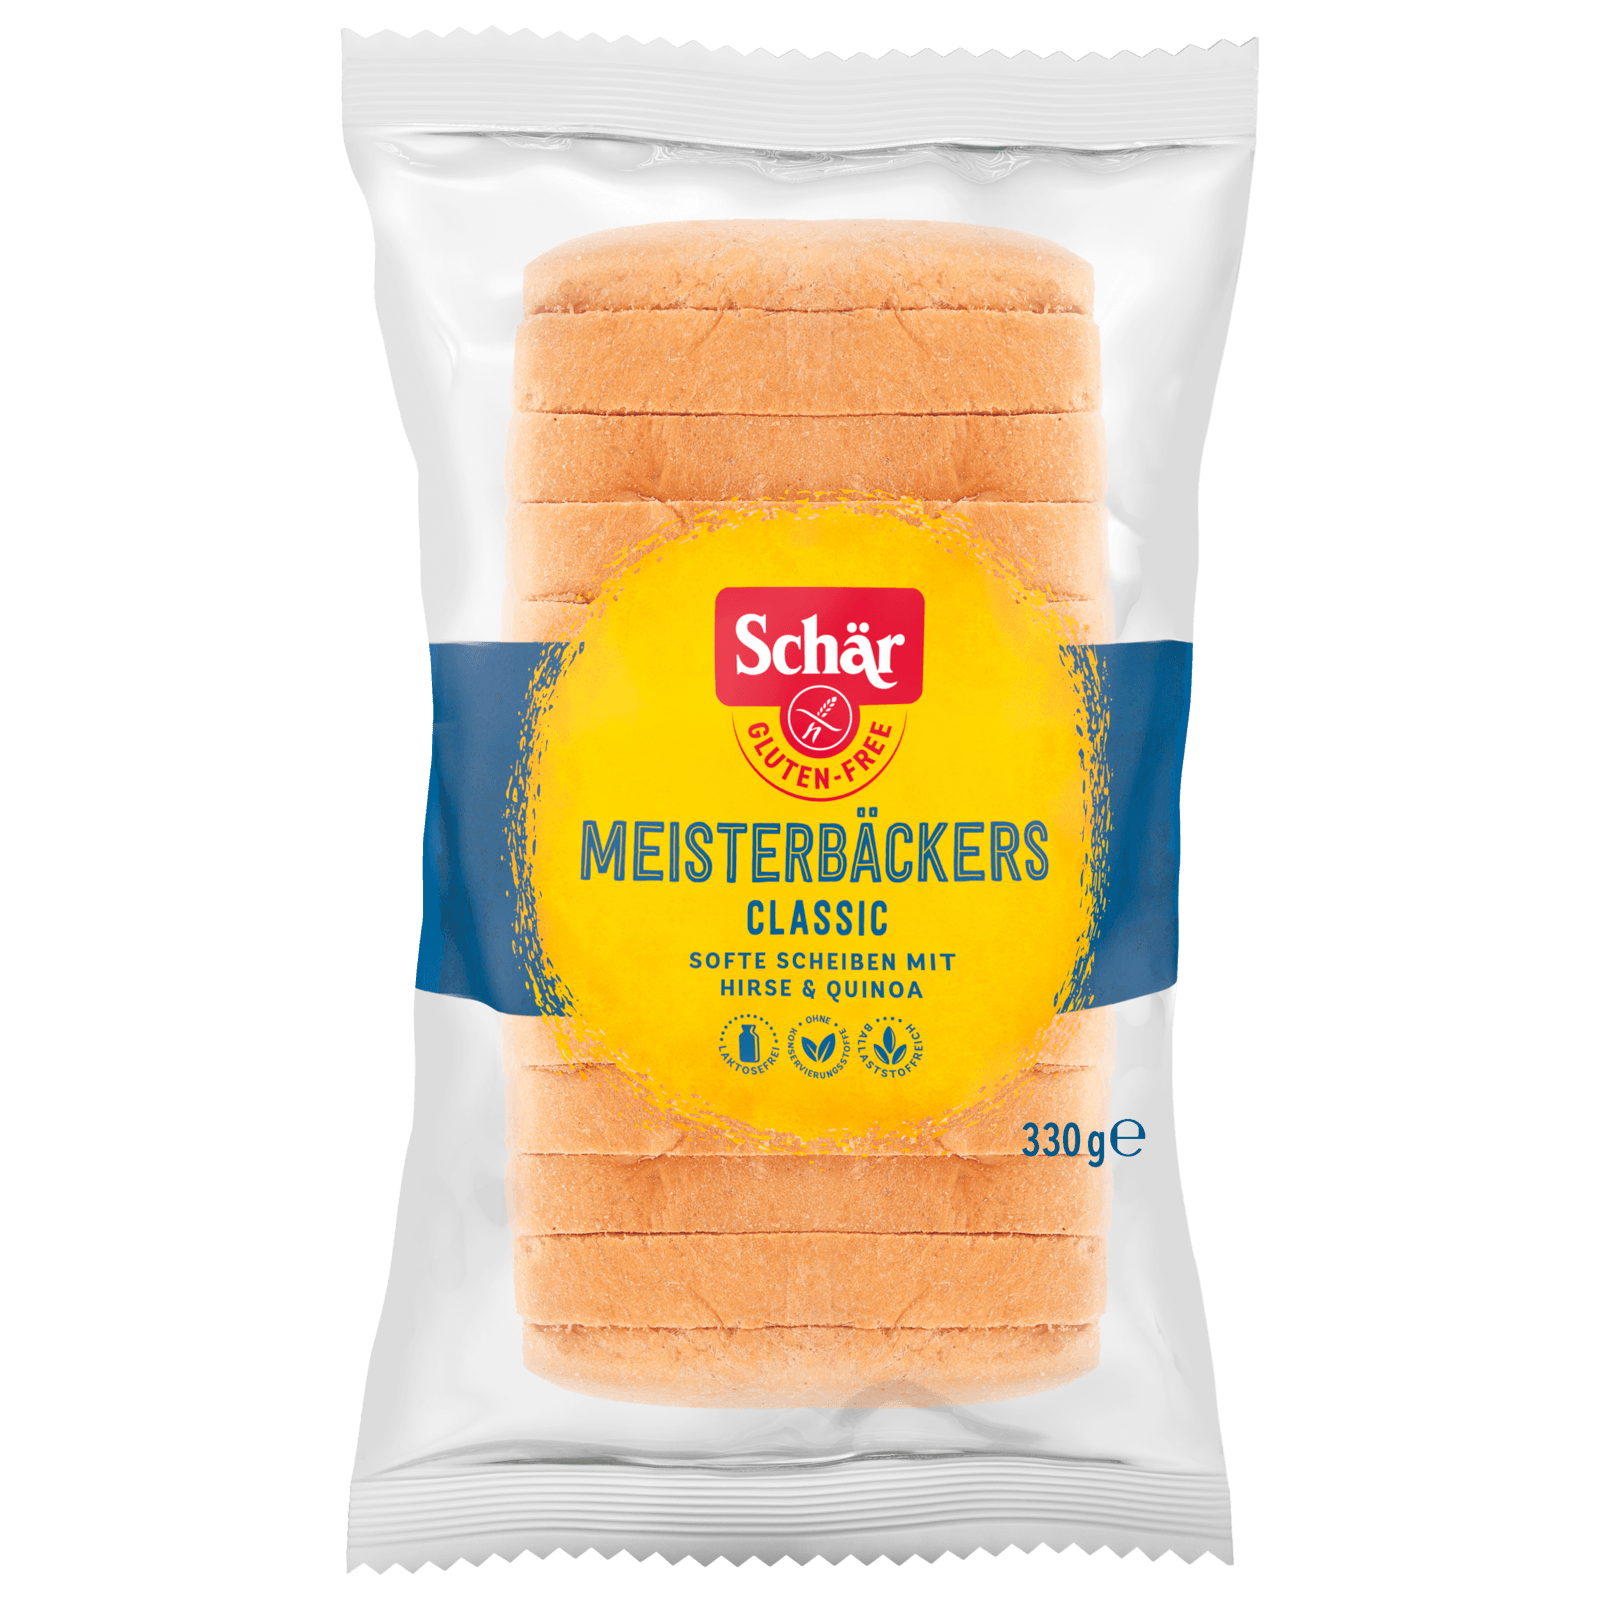 Schär Meisterbäckers Classic Softe Scheiben glutenfrei laktosefrei 330g